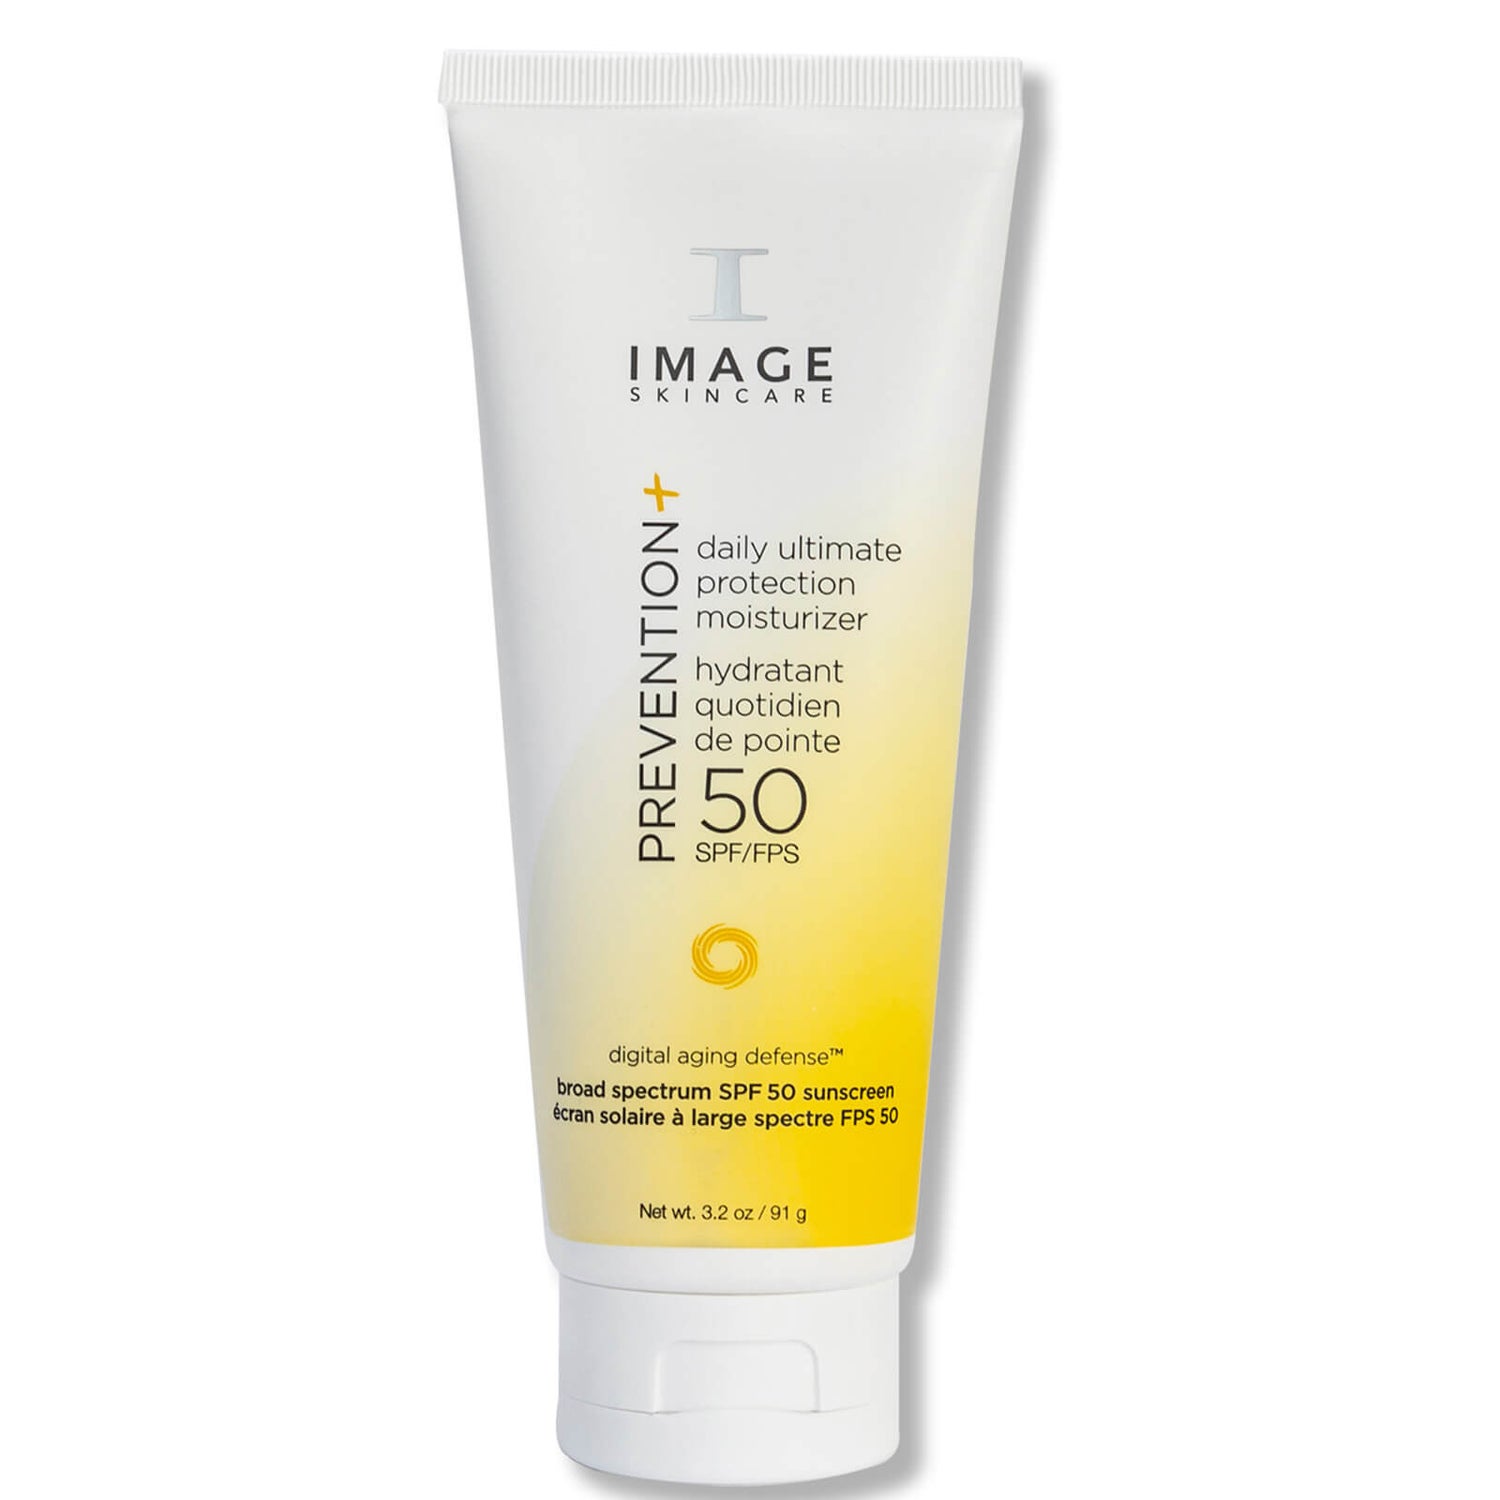 IMAGE Skincare PREVENTION+ SPF50 Daily Ultimate Protection Moisturizer 3.2 fl. oz